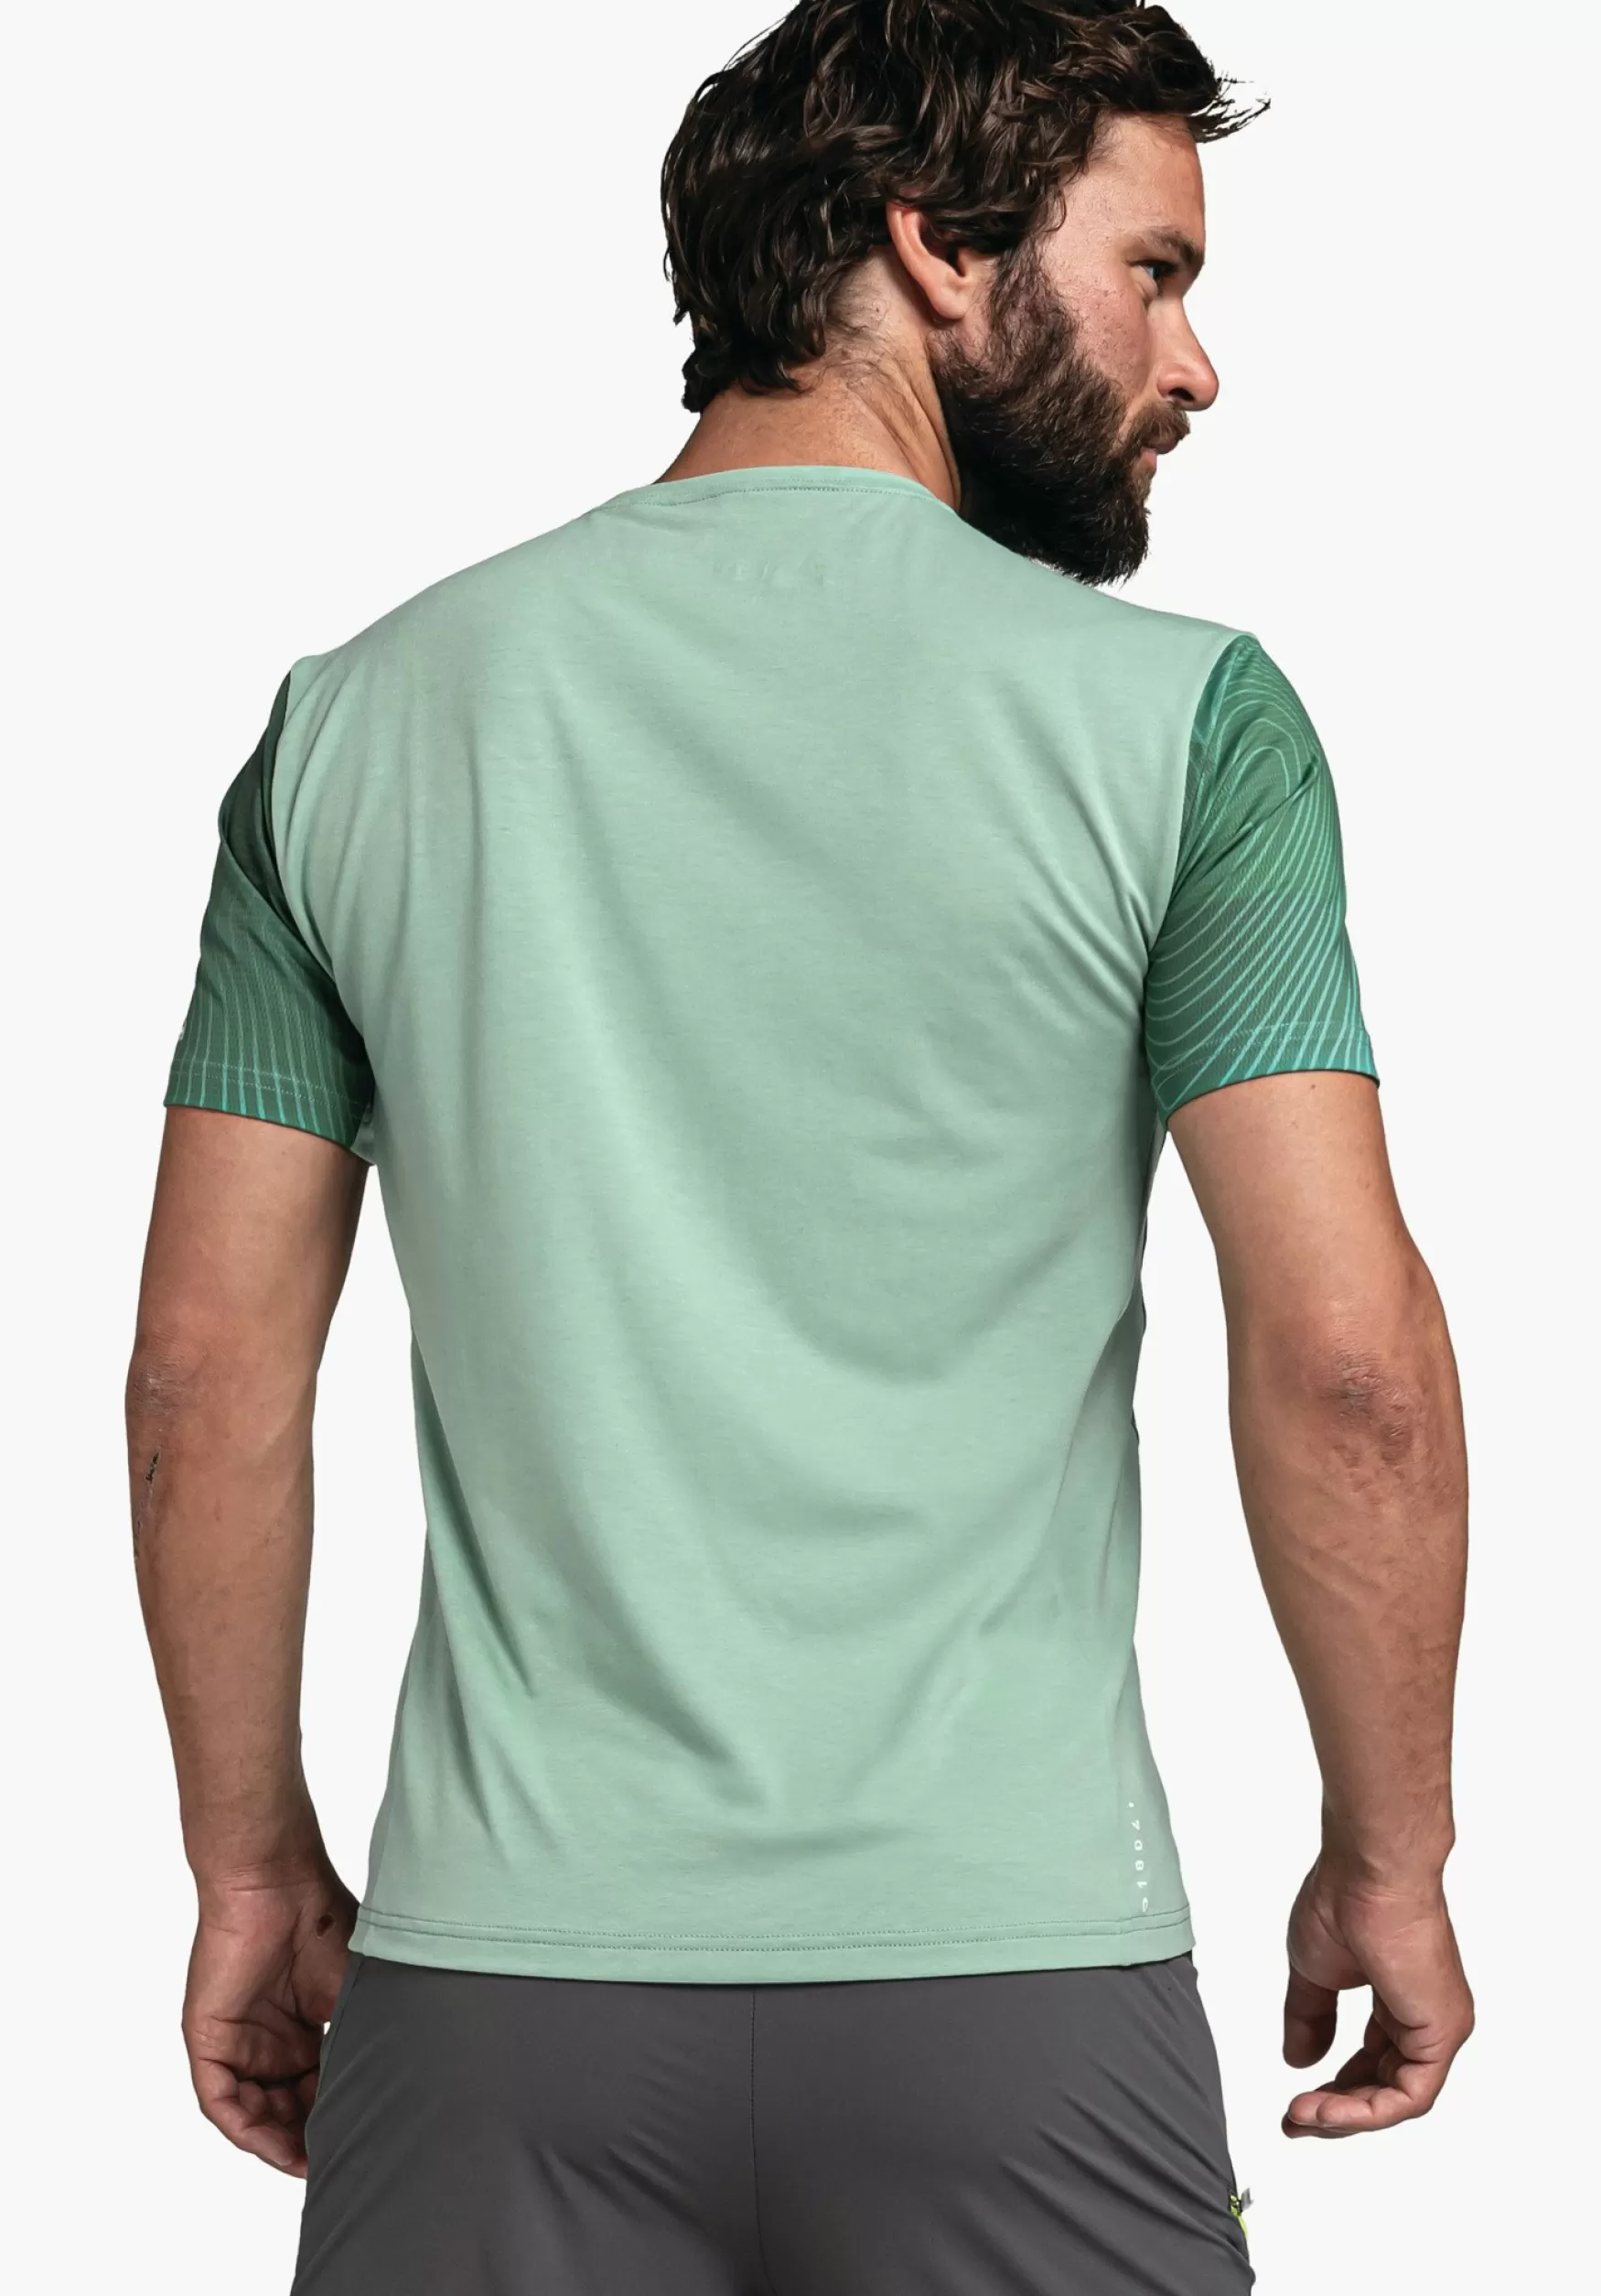 Shop SCHÖFFEL T-Shirt mit atmungsaktivem Rückenteil orange